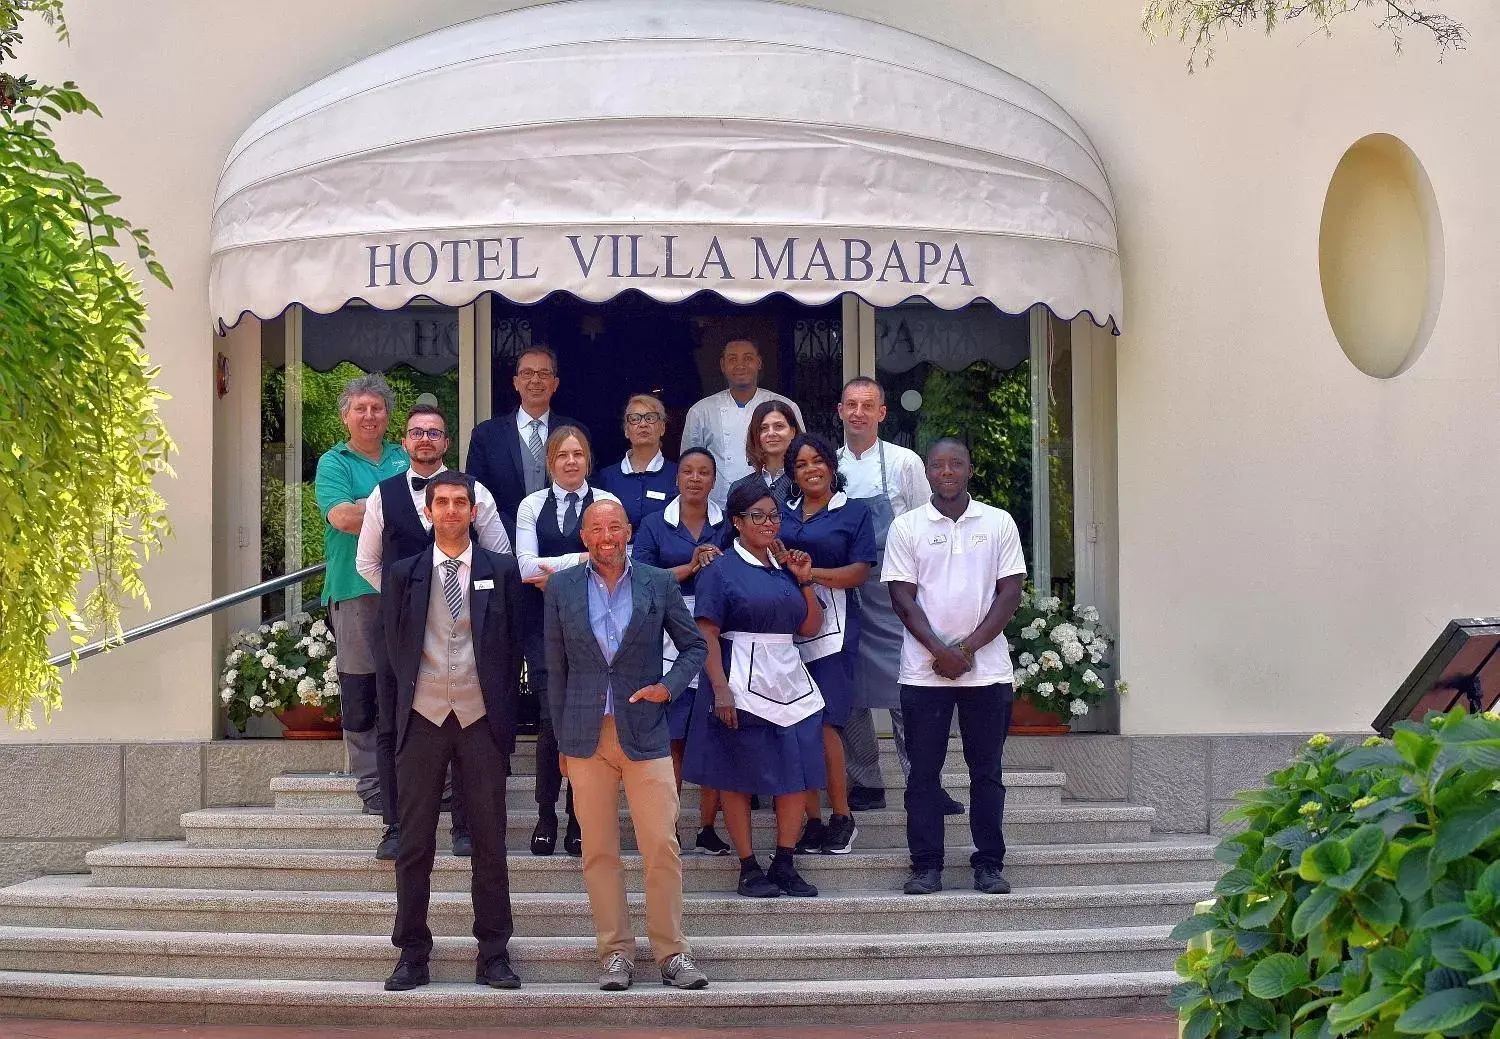 Staff in Hotel Villa Mabapa